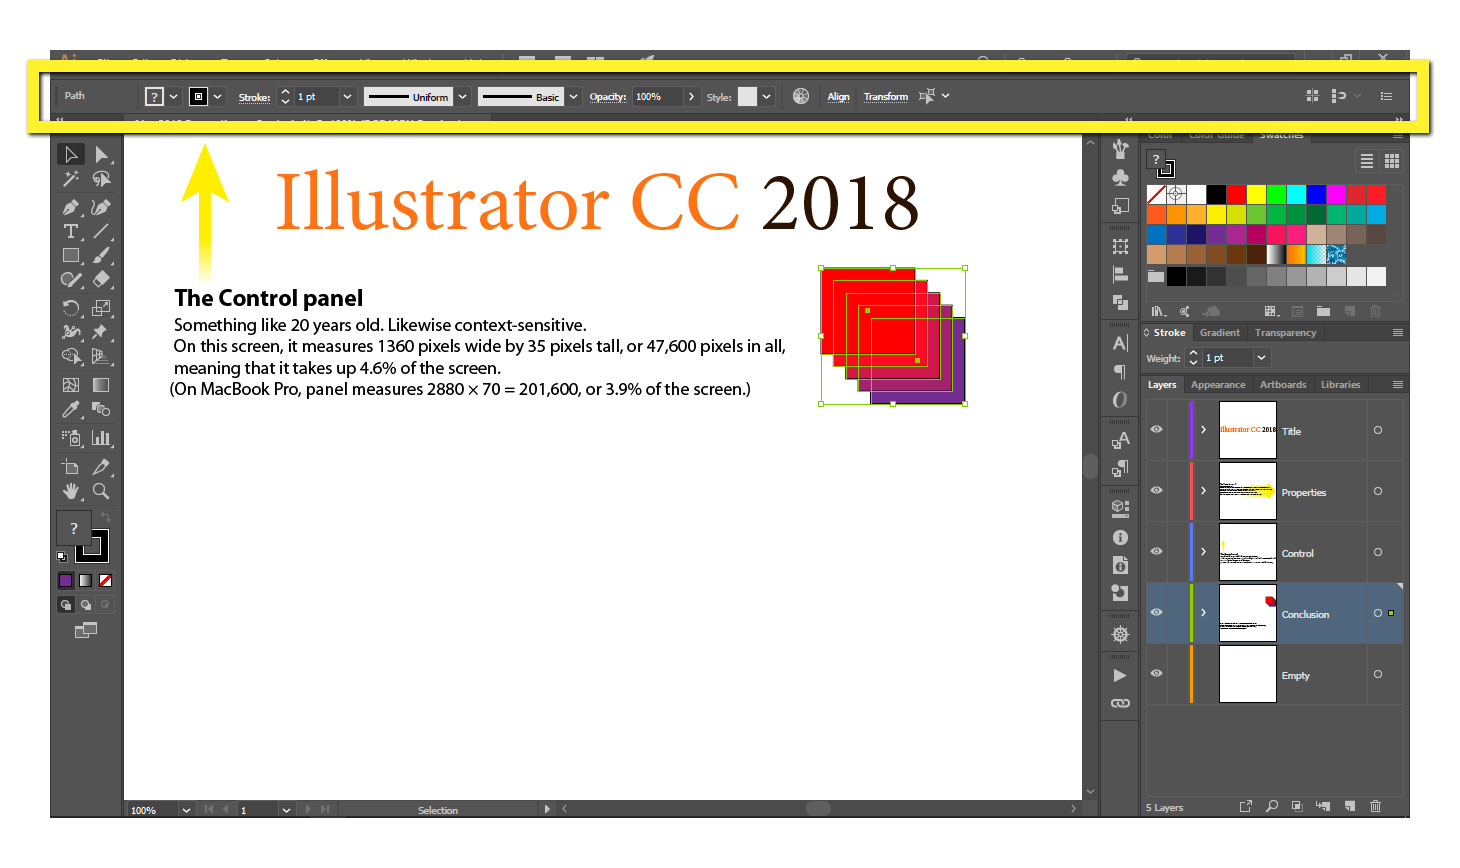 The Control panel in Adobe Illustrator CC 2018